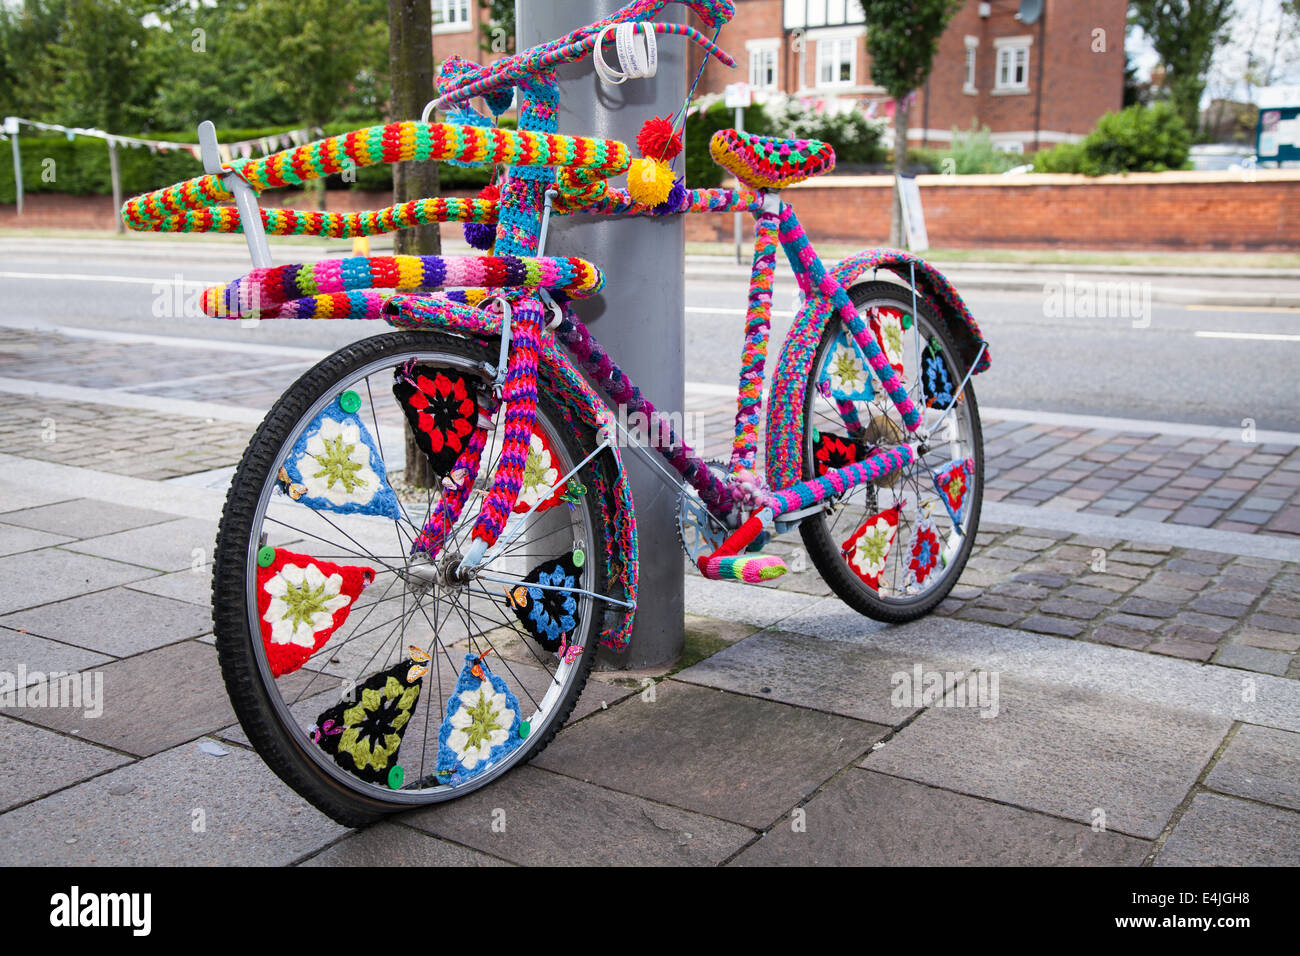 Decorated knitting wool 'Yarn bombed' knitted bike covers, crocheted bicycle, graffiti art knitting, yarnbombing in Hoylake, street arts festival, UK. Stock Photo